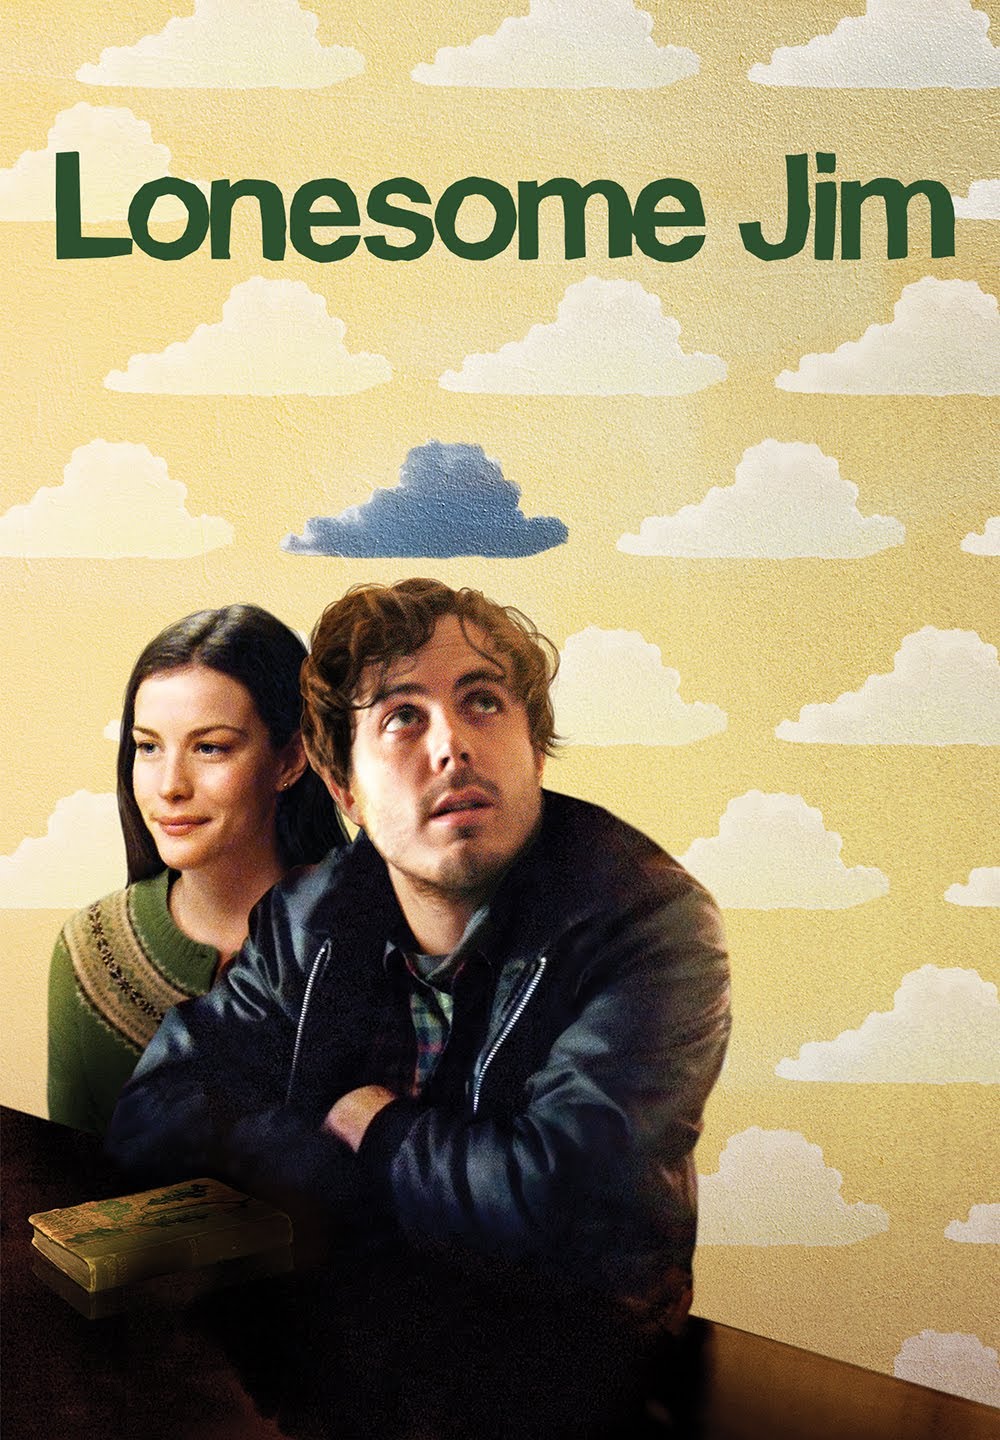 Lonesome Jim (2005)